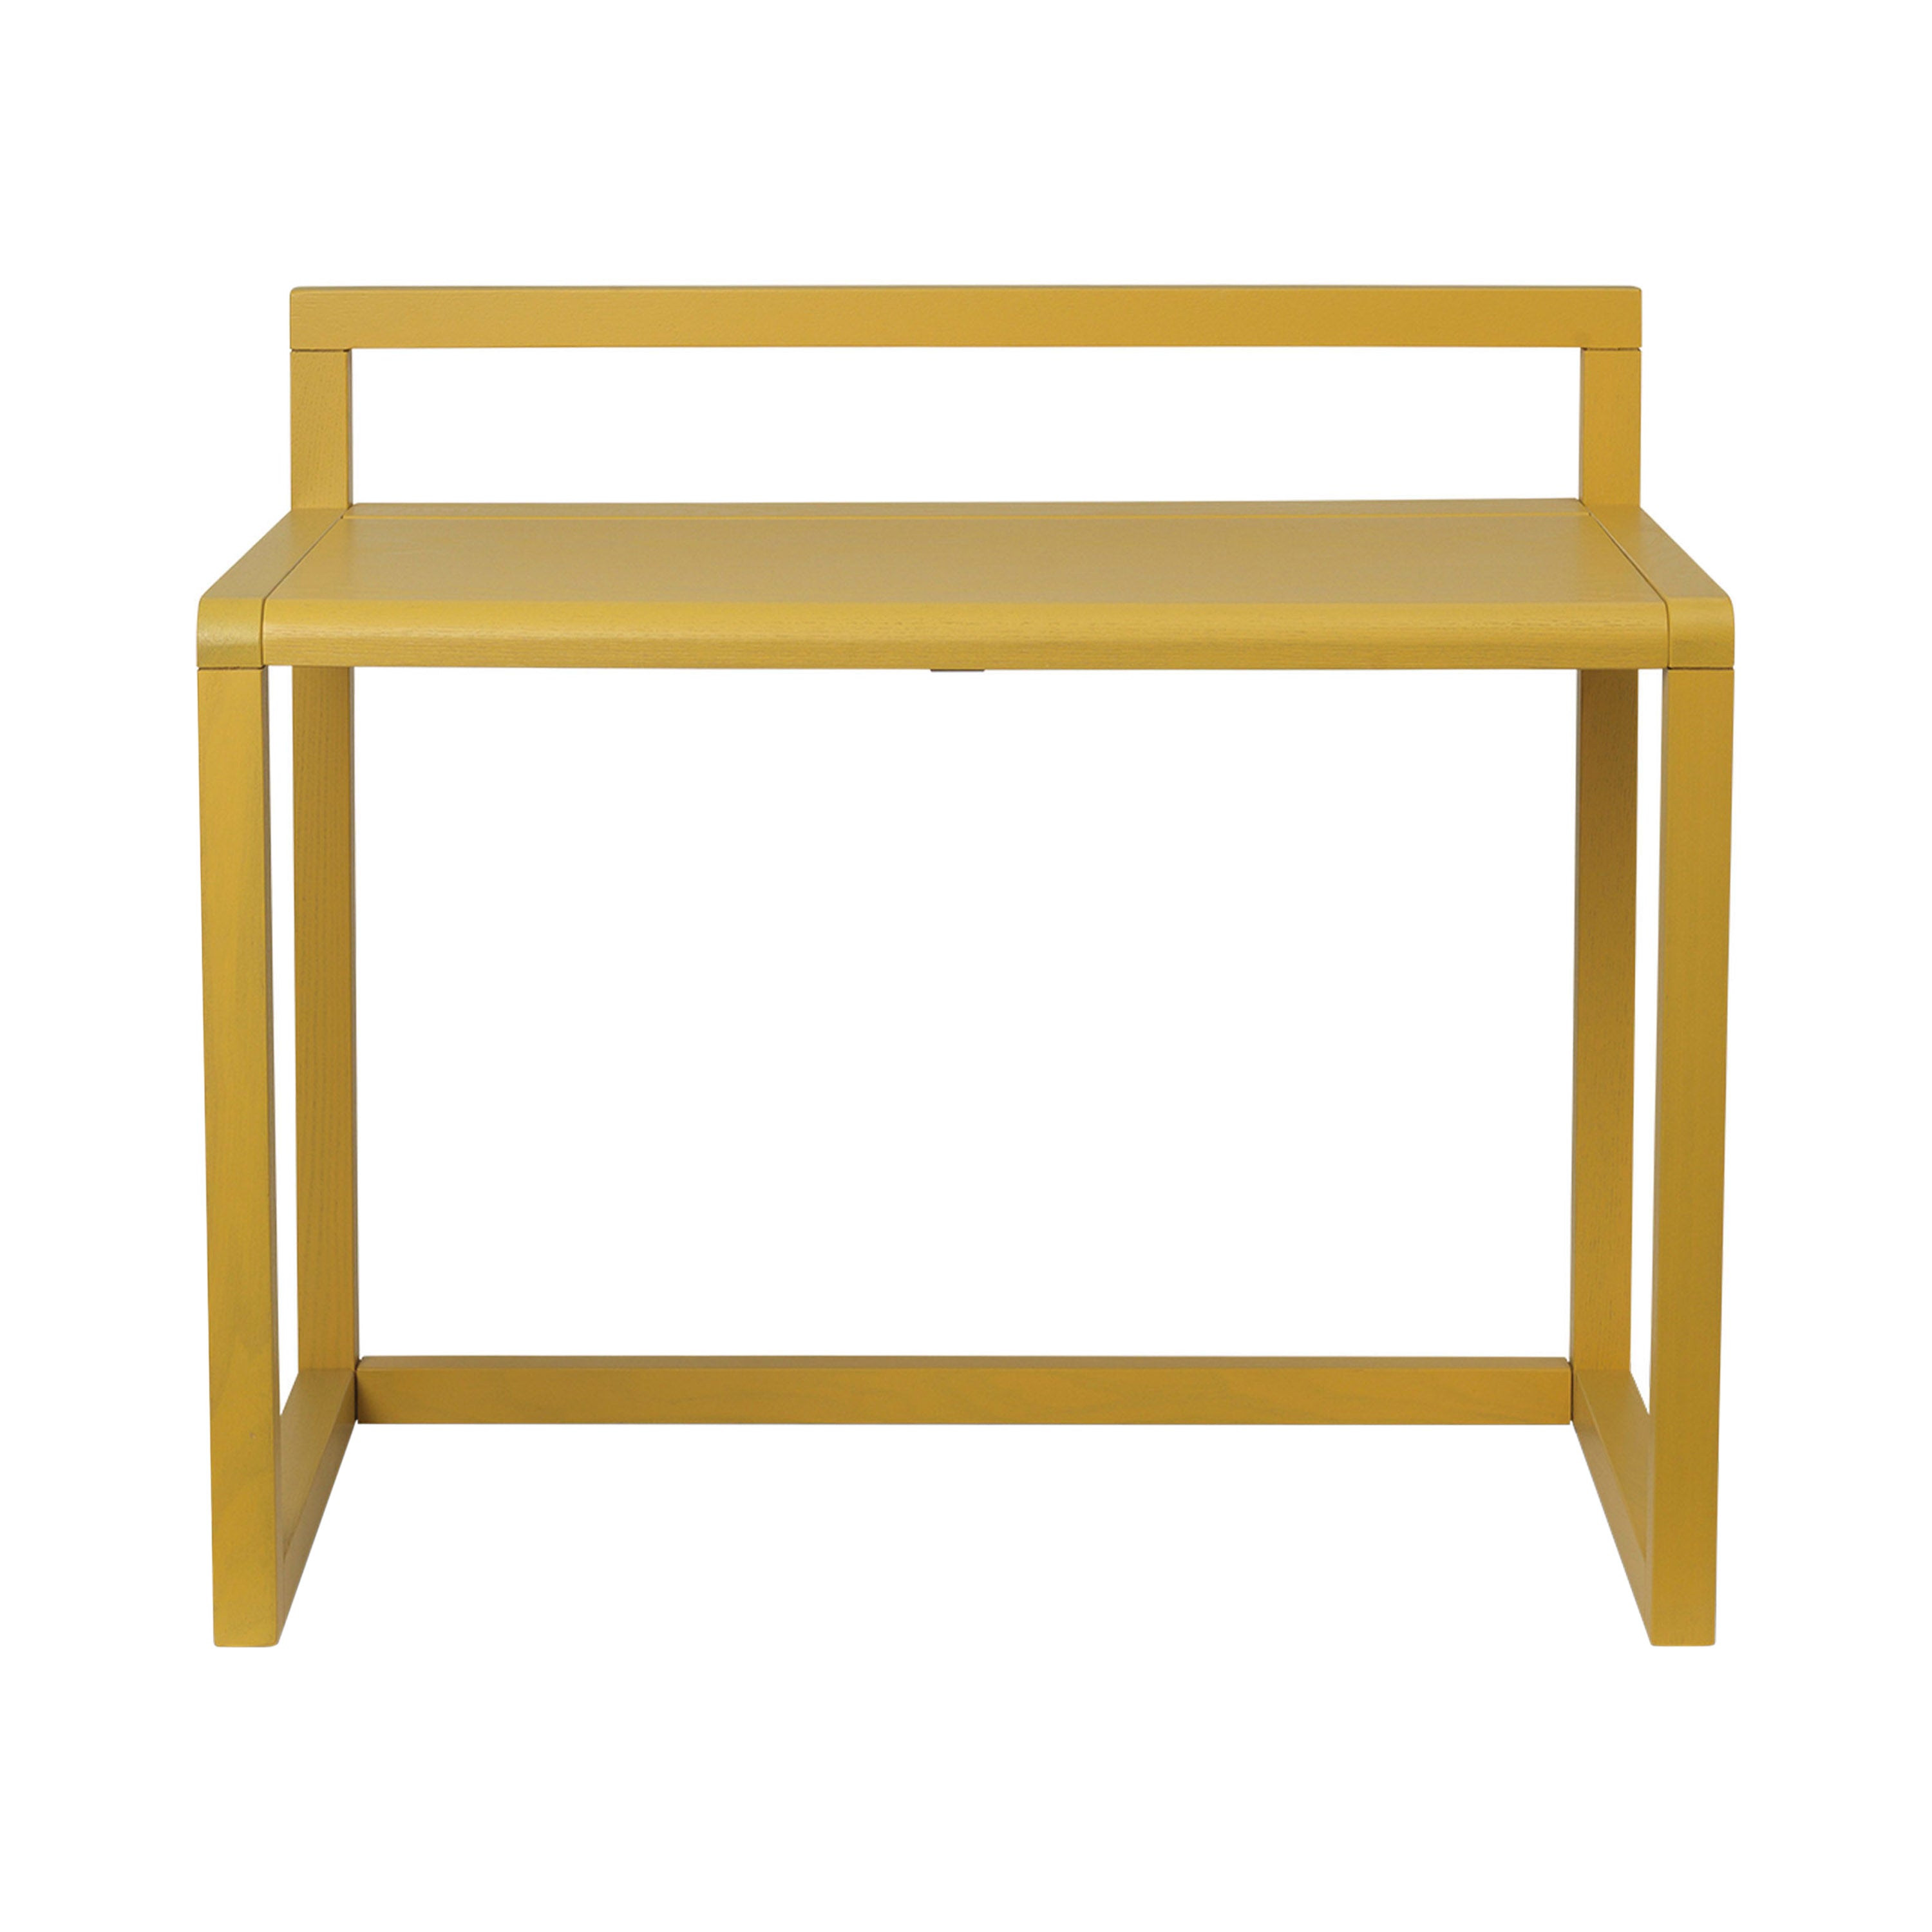 Little Architect Desk: Yellow